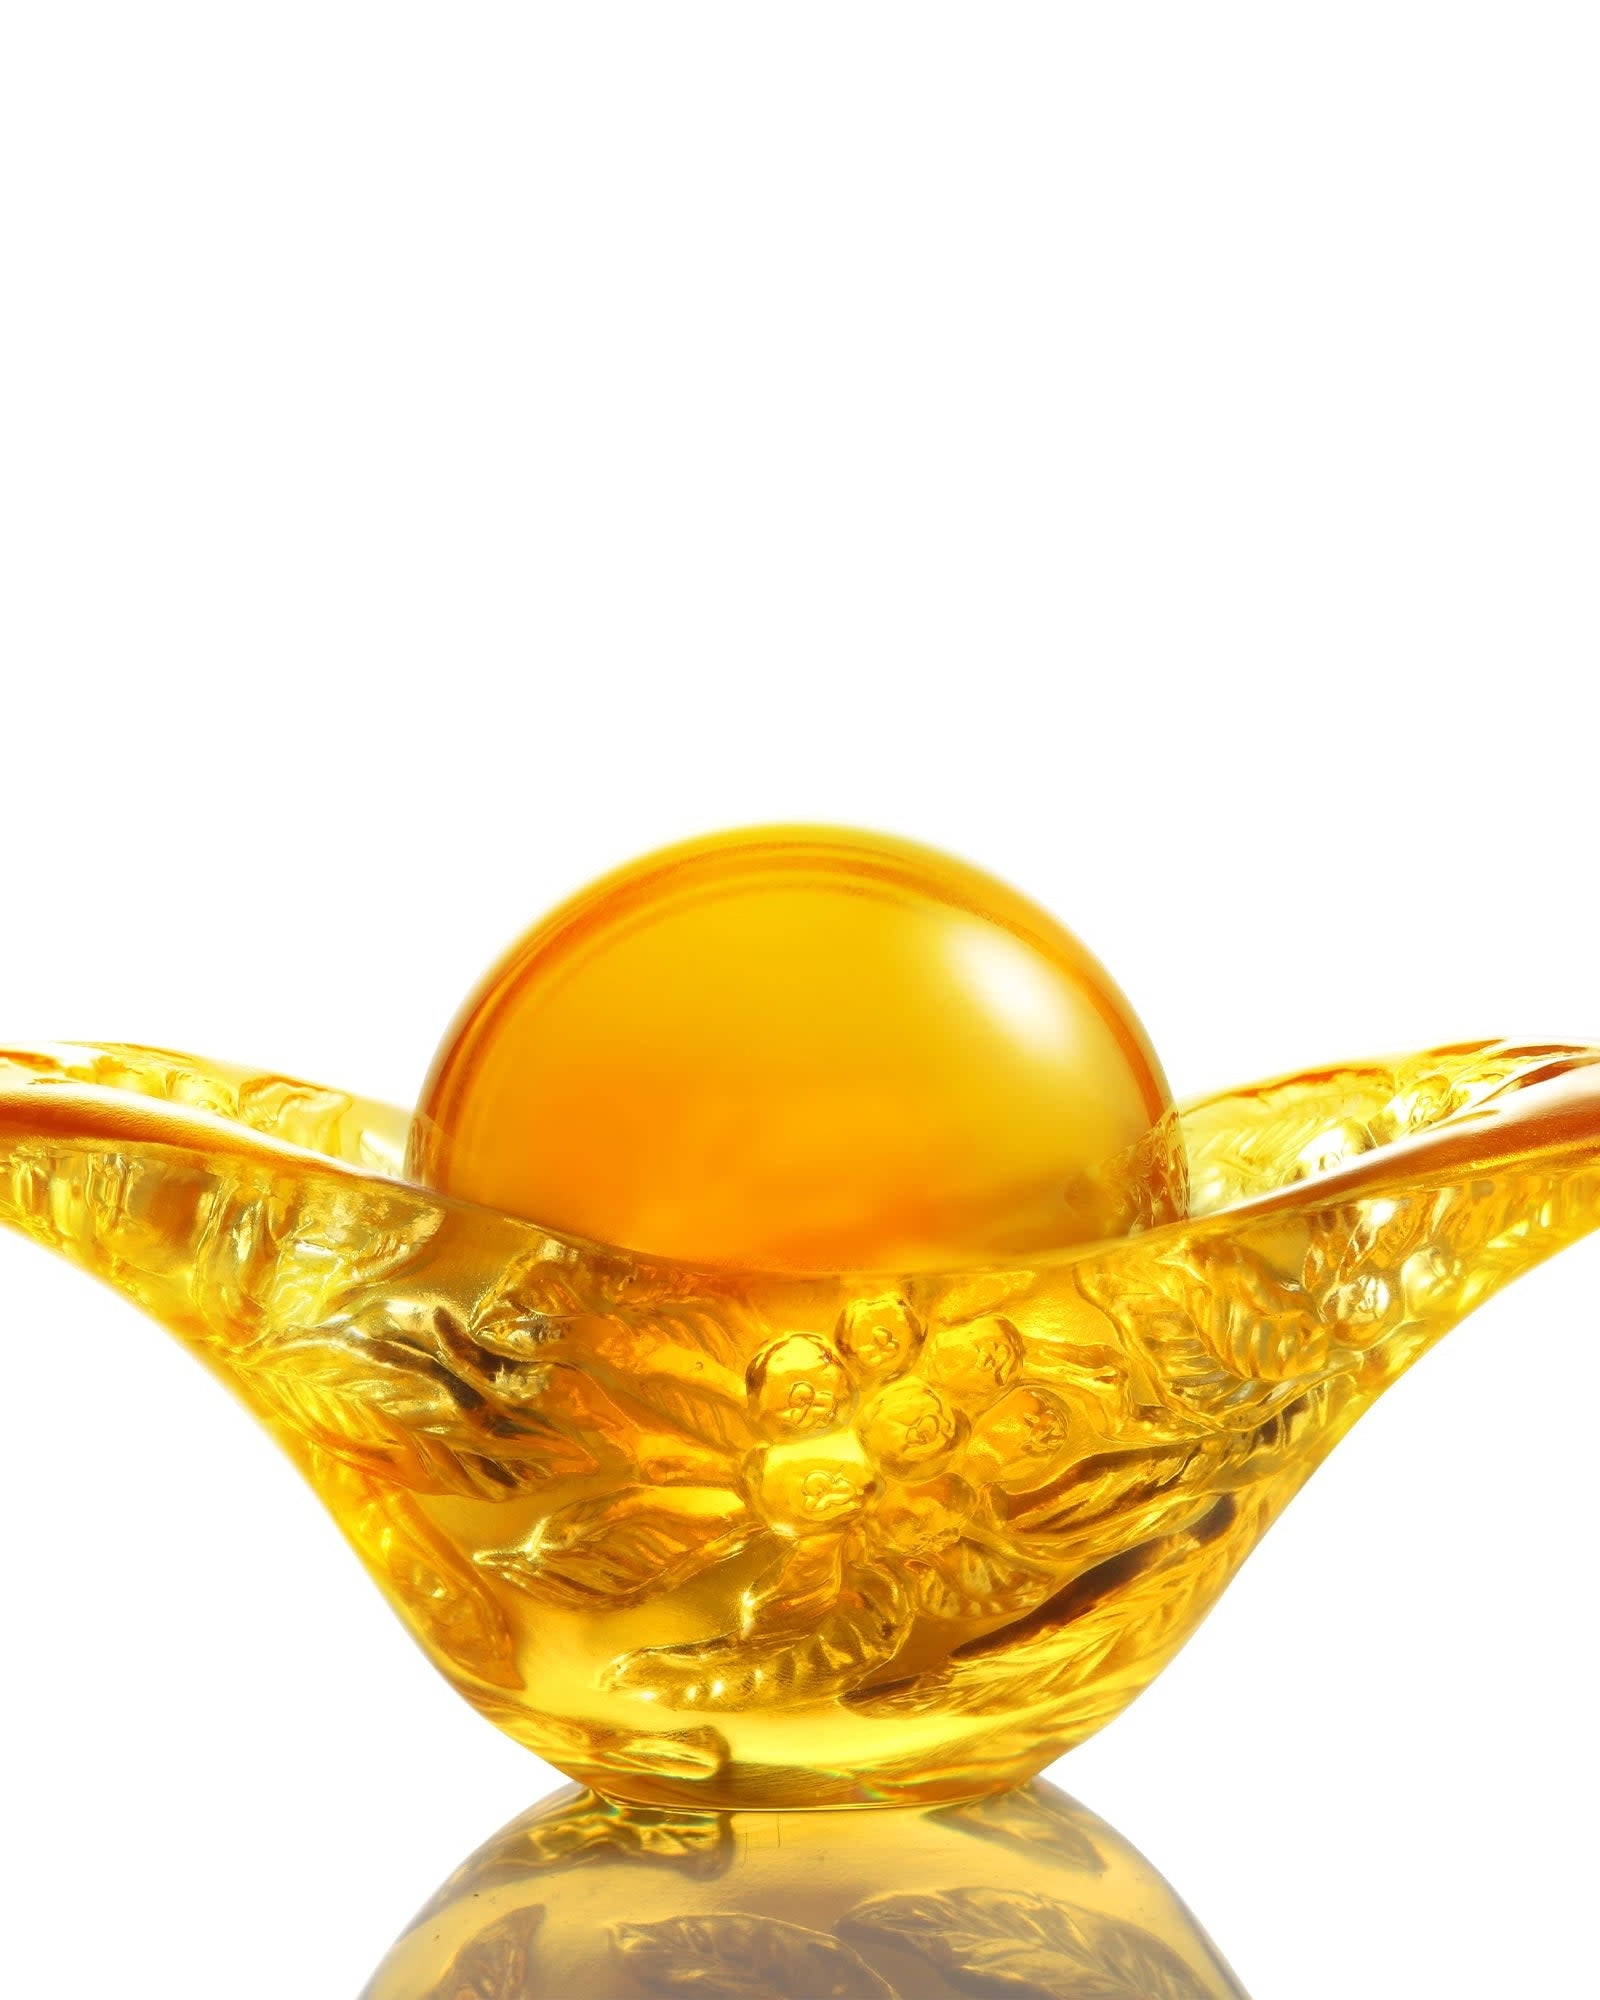 LIULI Crystal Art Gold Ingot, "Golden Fruit, Loquat"